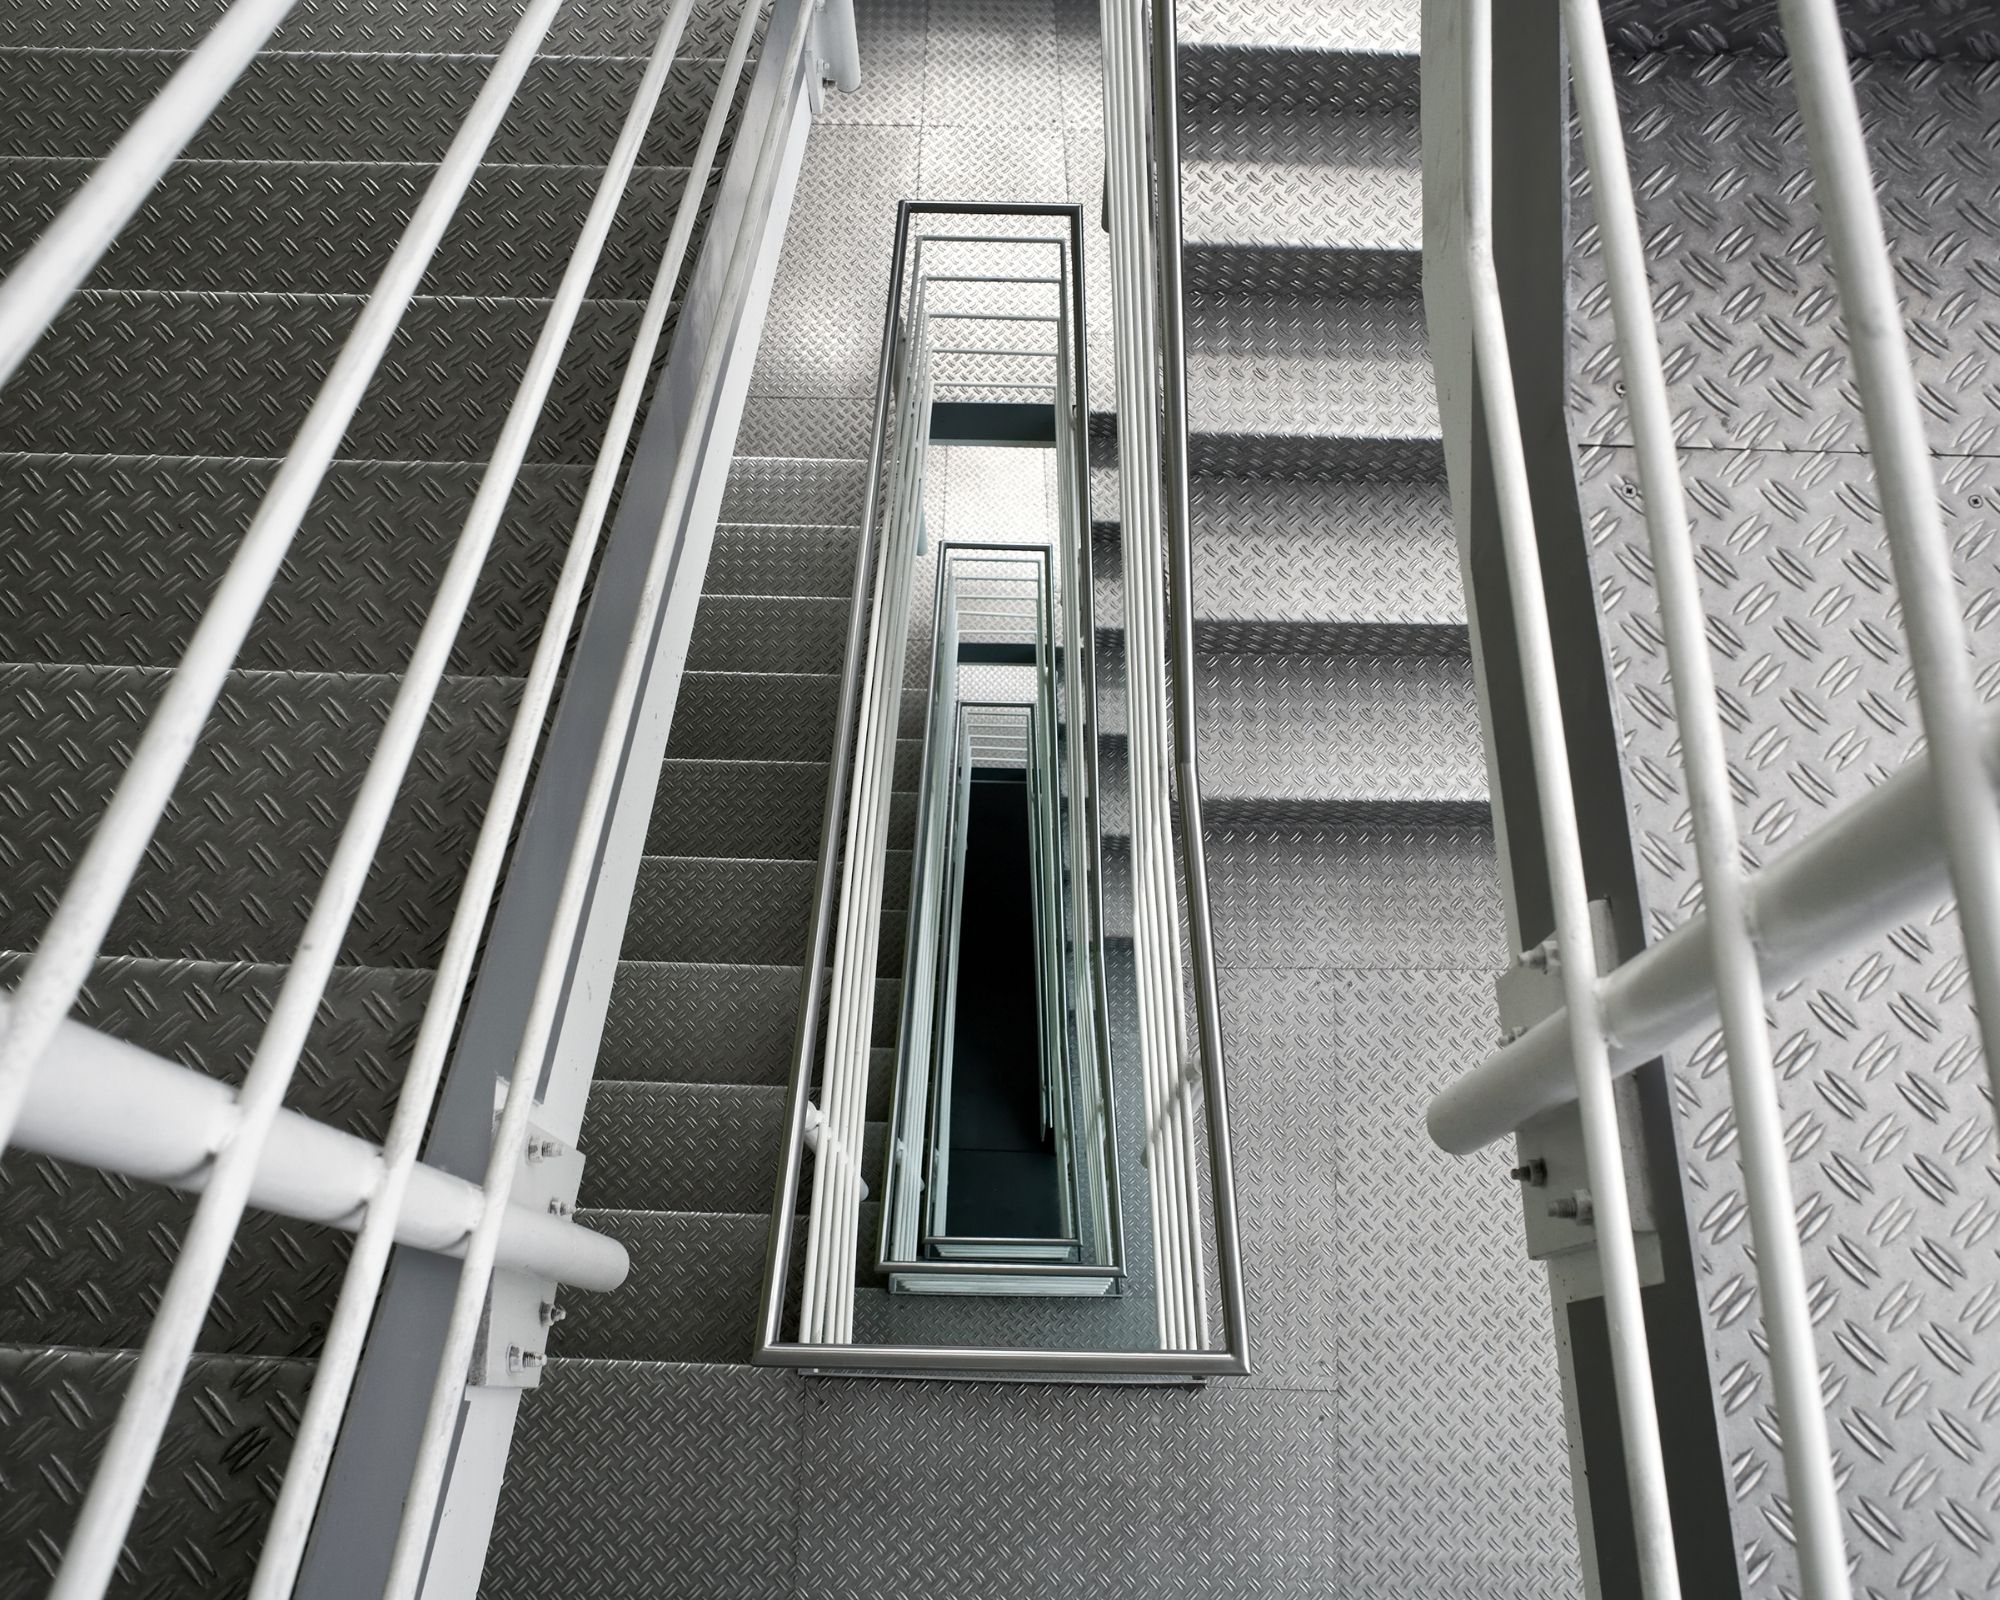 Why choose an aluminium exterior staircase?